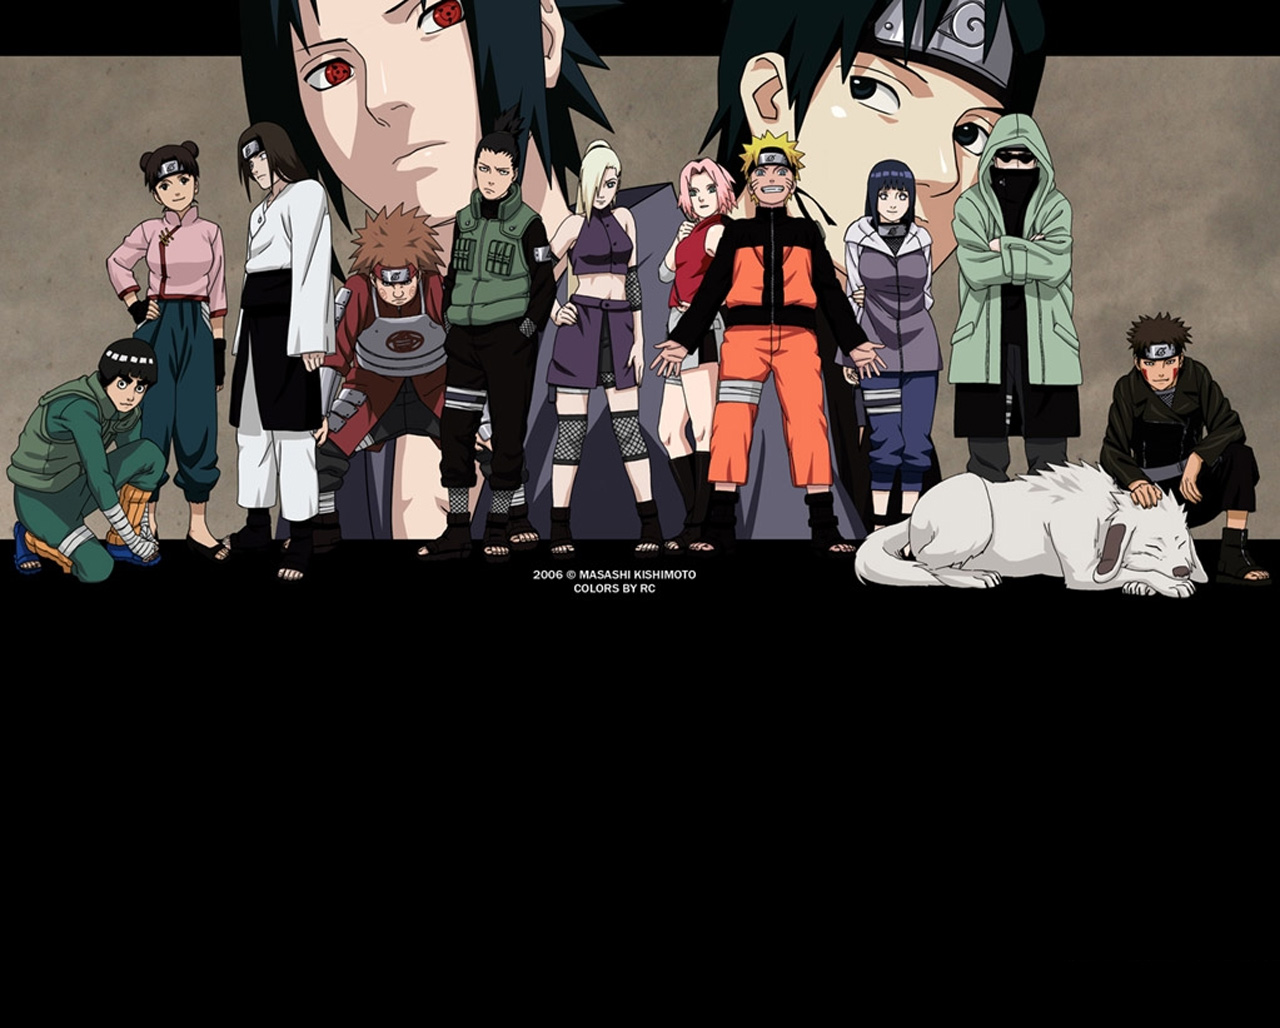 Naruto Group wallpaper Animebay Wallpapers